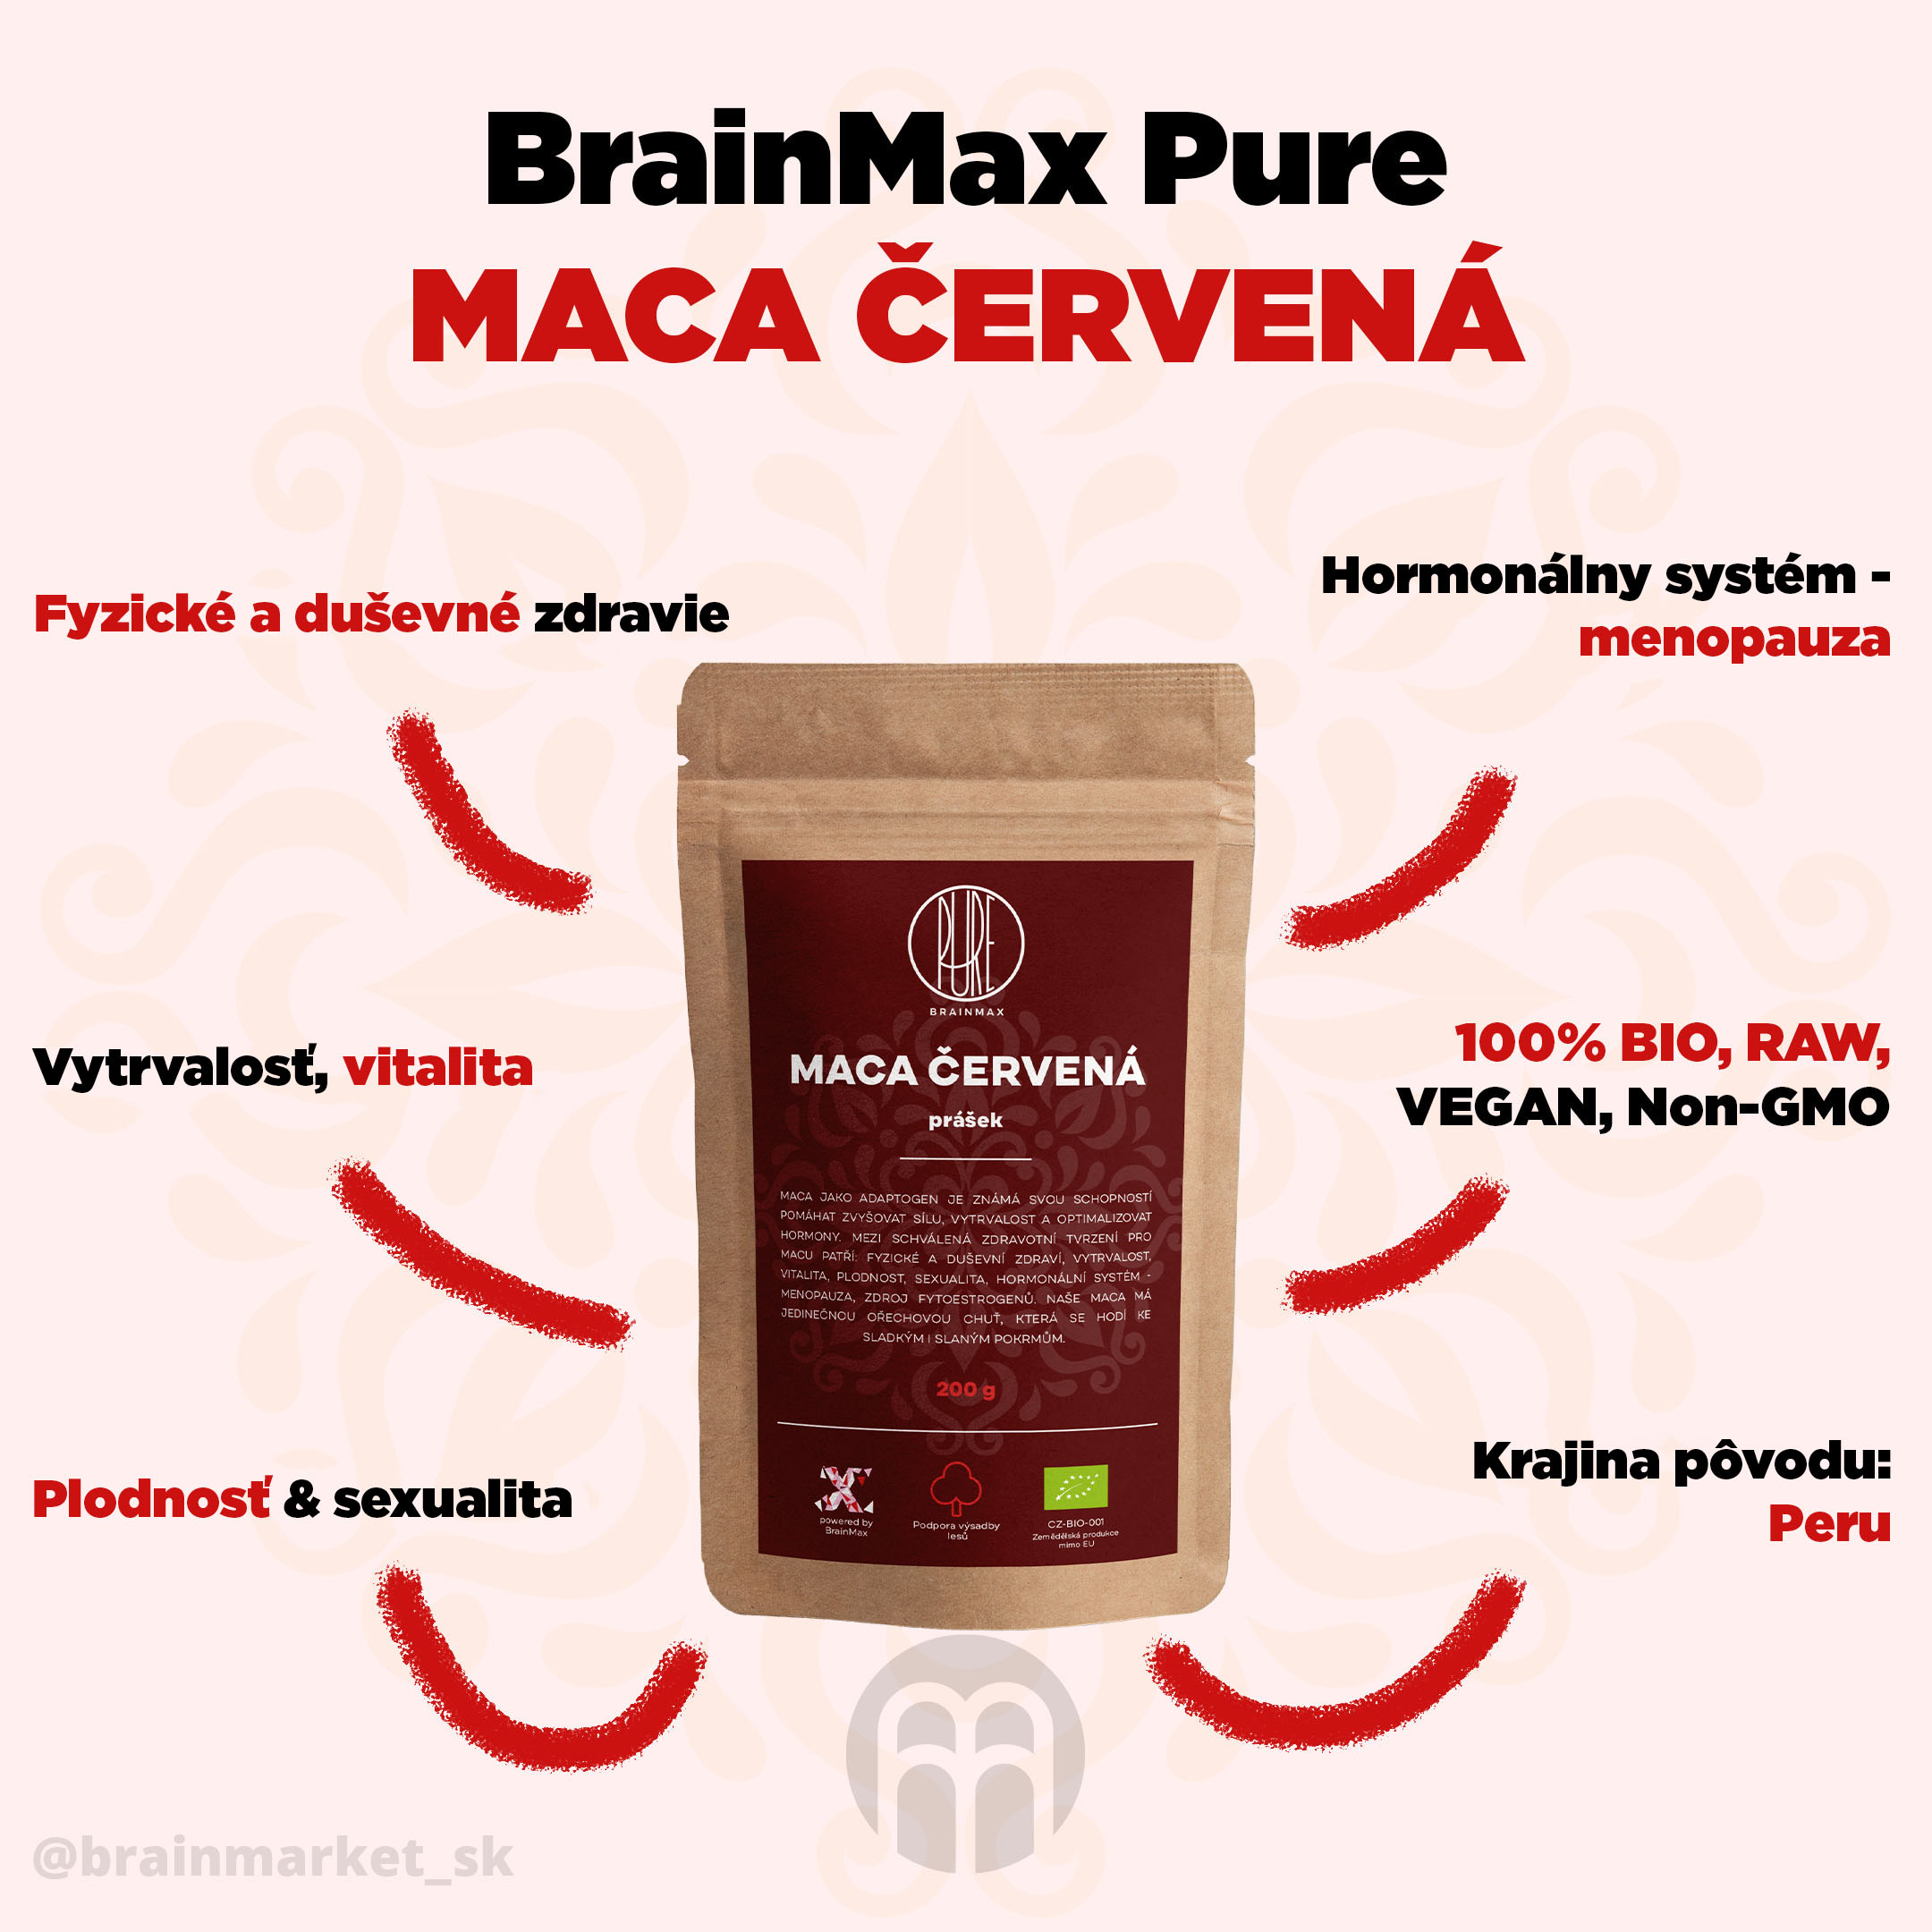 maca-cervena-infografika-brainmarket-cz